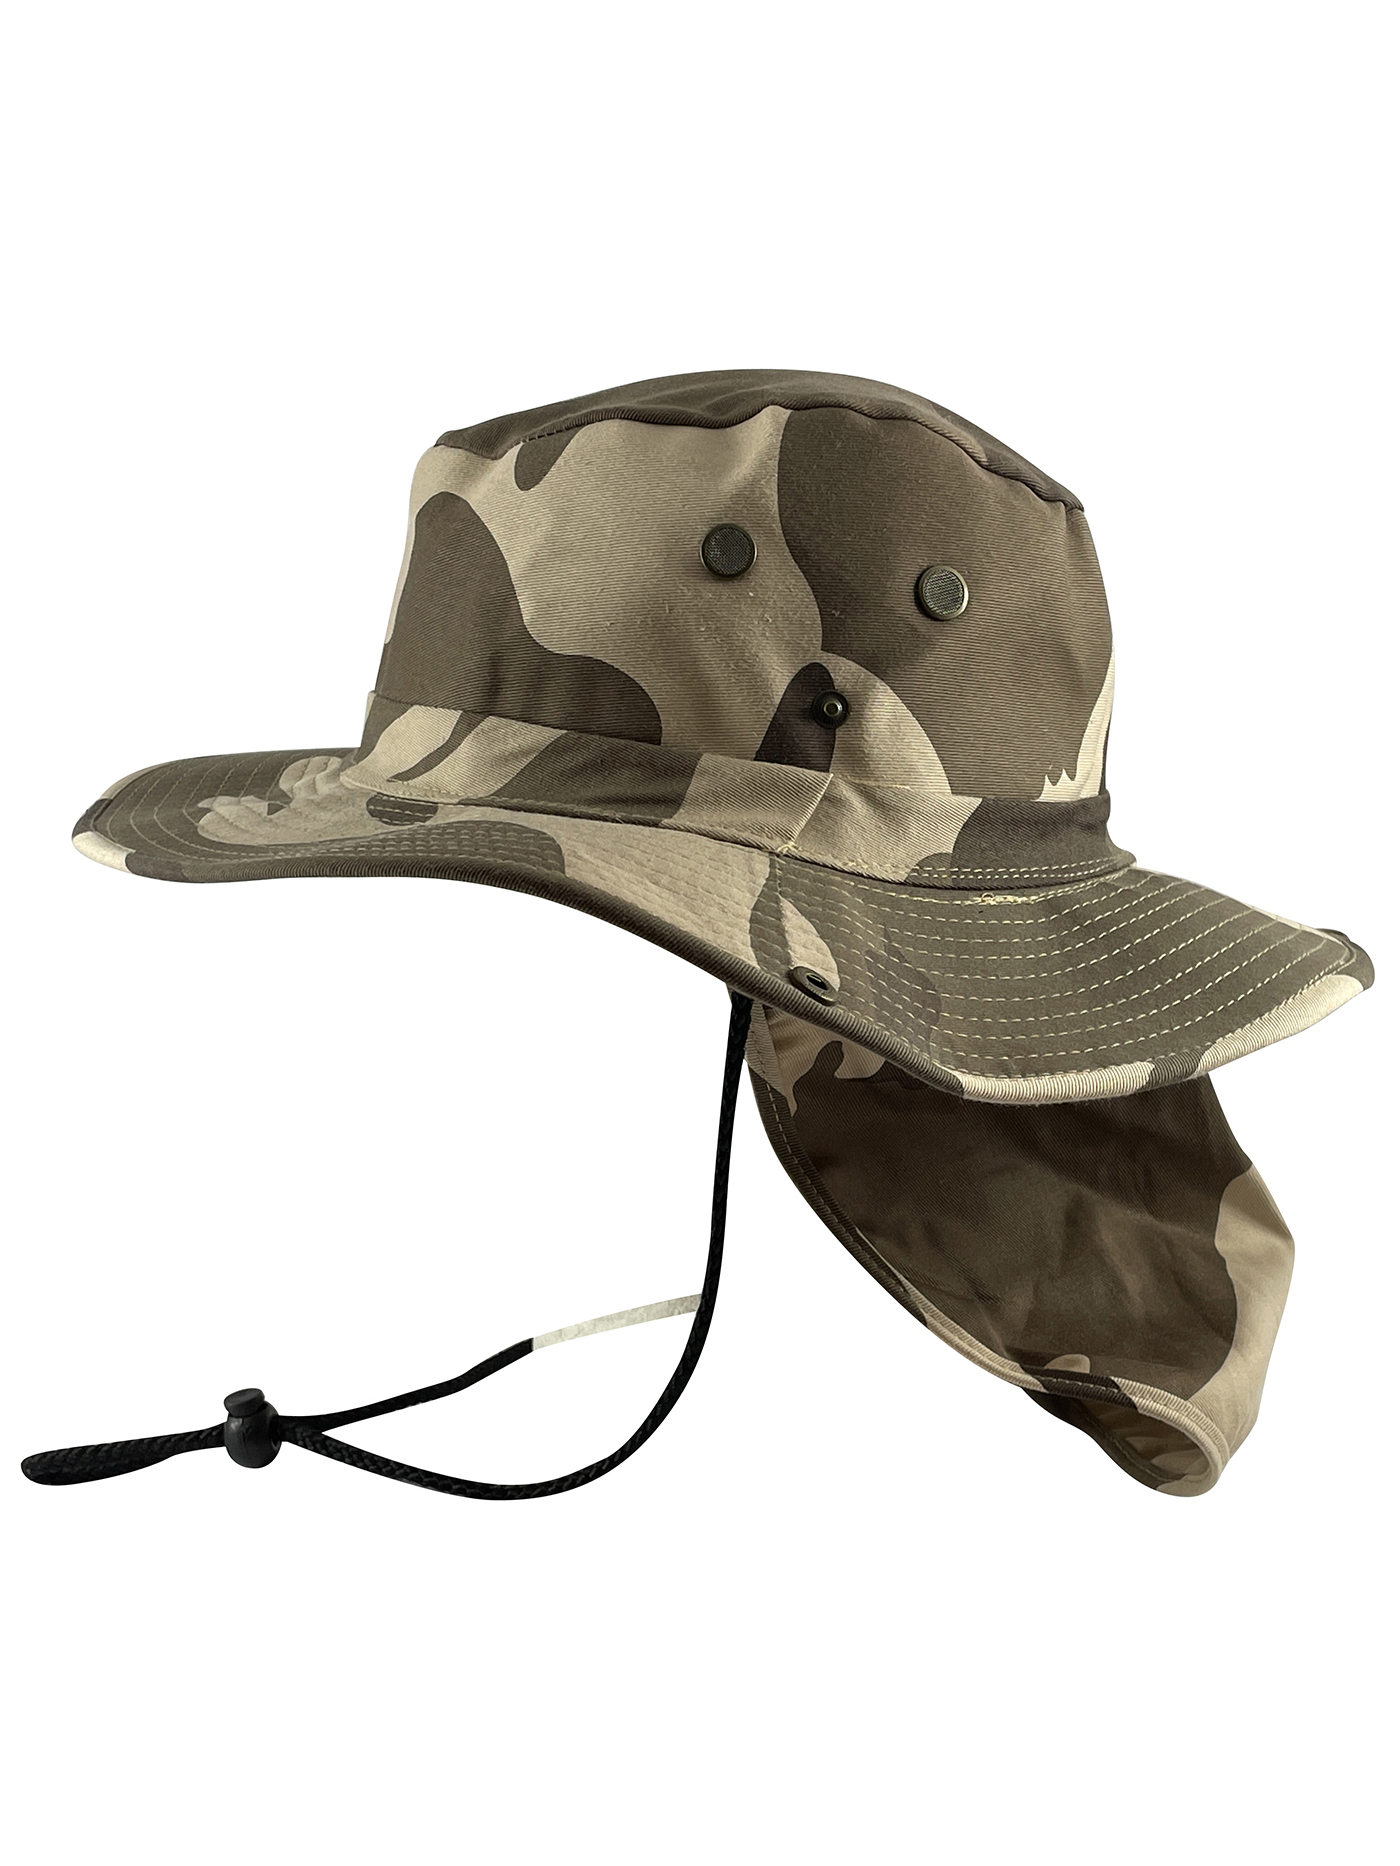 Top Headwear Safari Explorer Bucket Hat Flap Neck Cover - Desert Camo - M - image 2 of 3